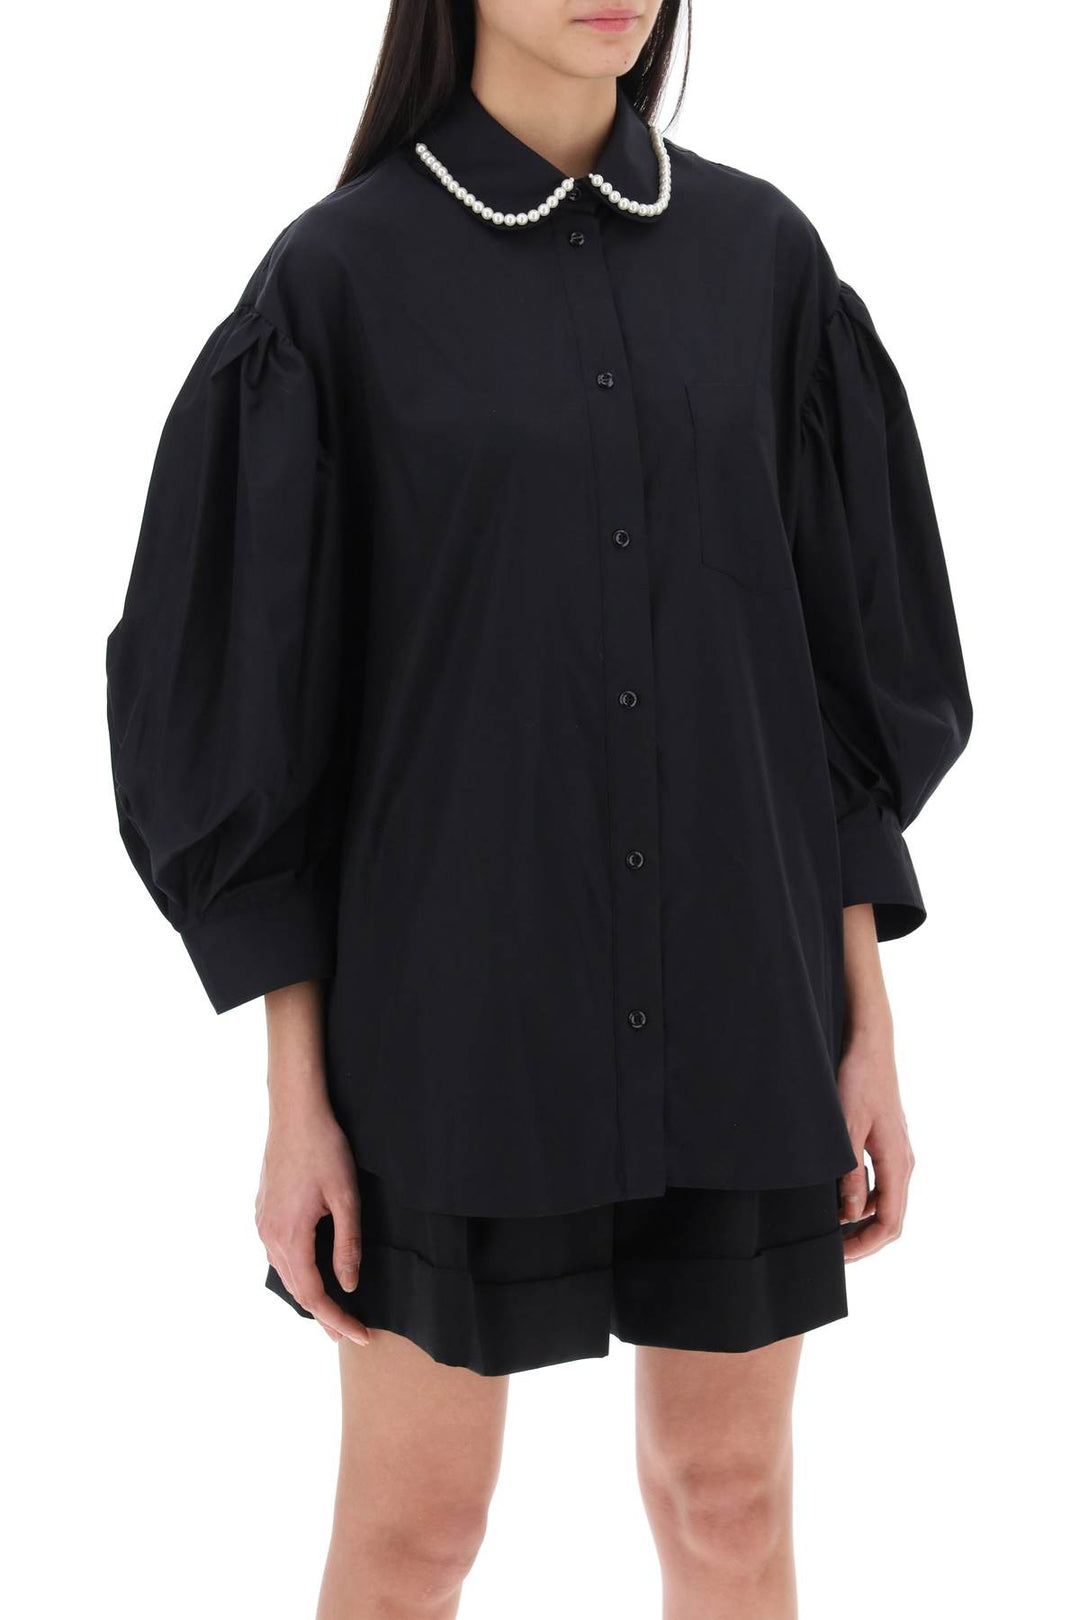 Simone Rocha Puff Sleeve Shirt With Embellishment   Nero